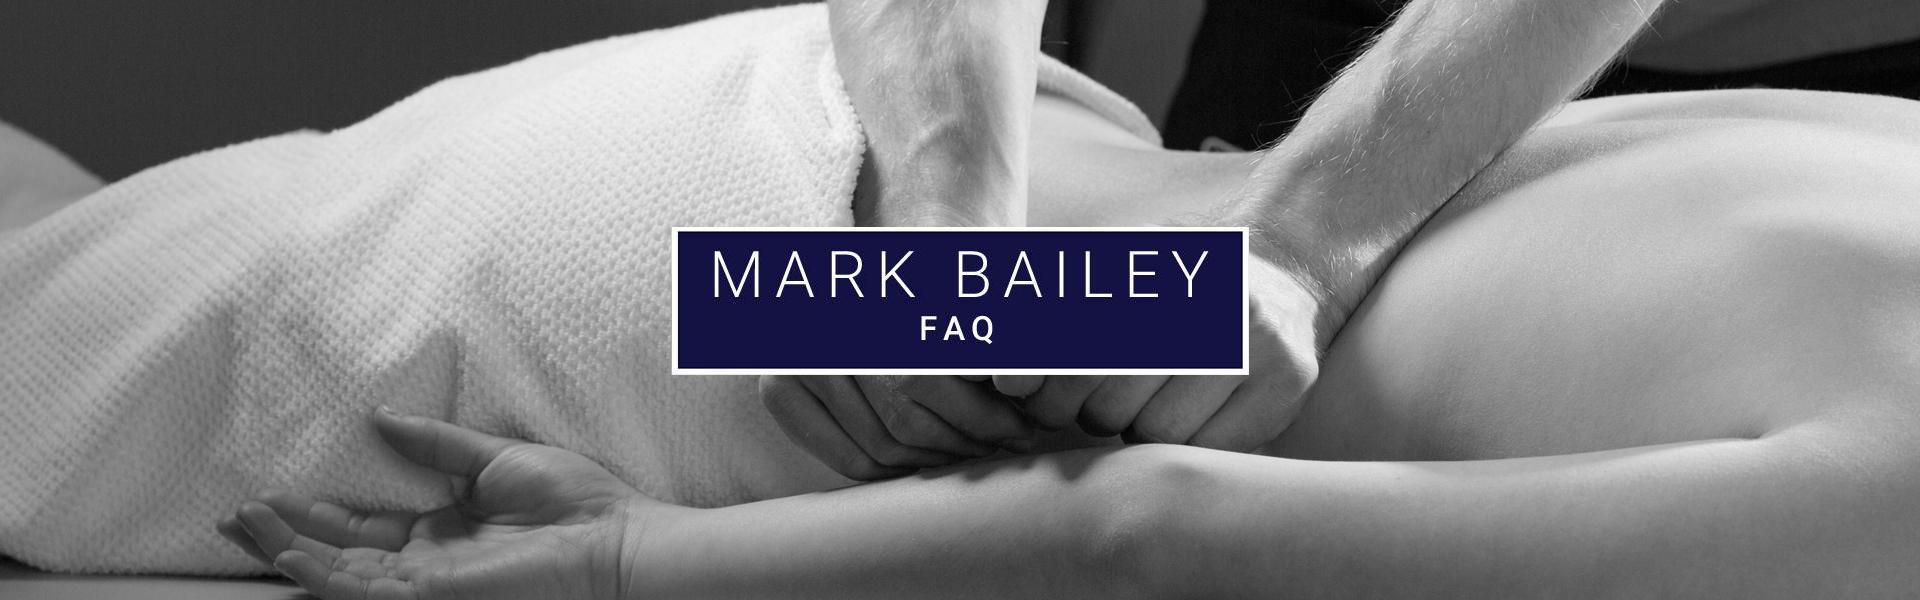 Mark Bailey Massage Therapy FAQ